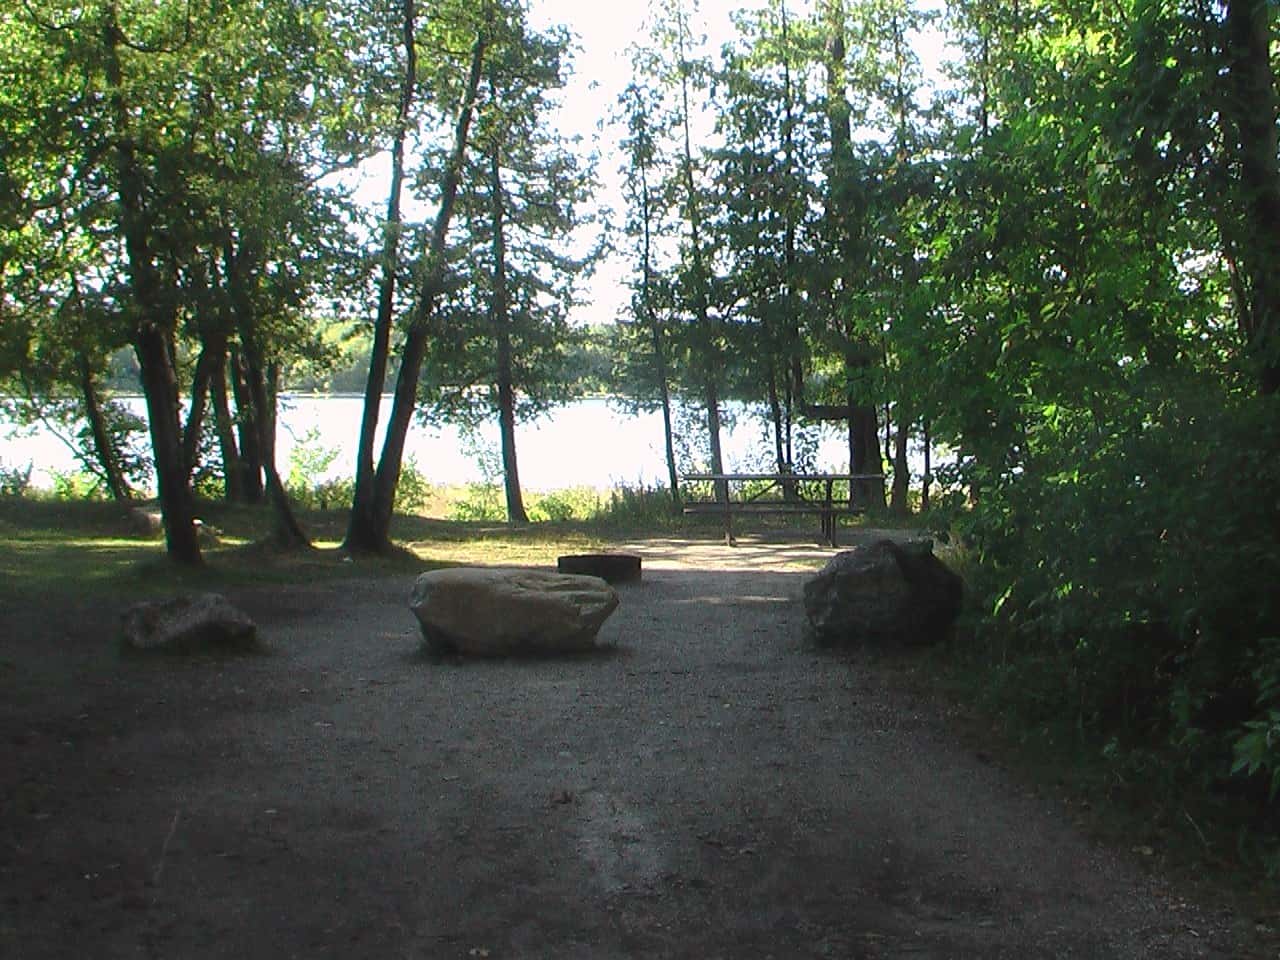 File:Peninsula State Park Nicolet Bay Campsite 860.jpg - Wikimedia Commons